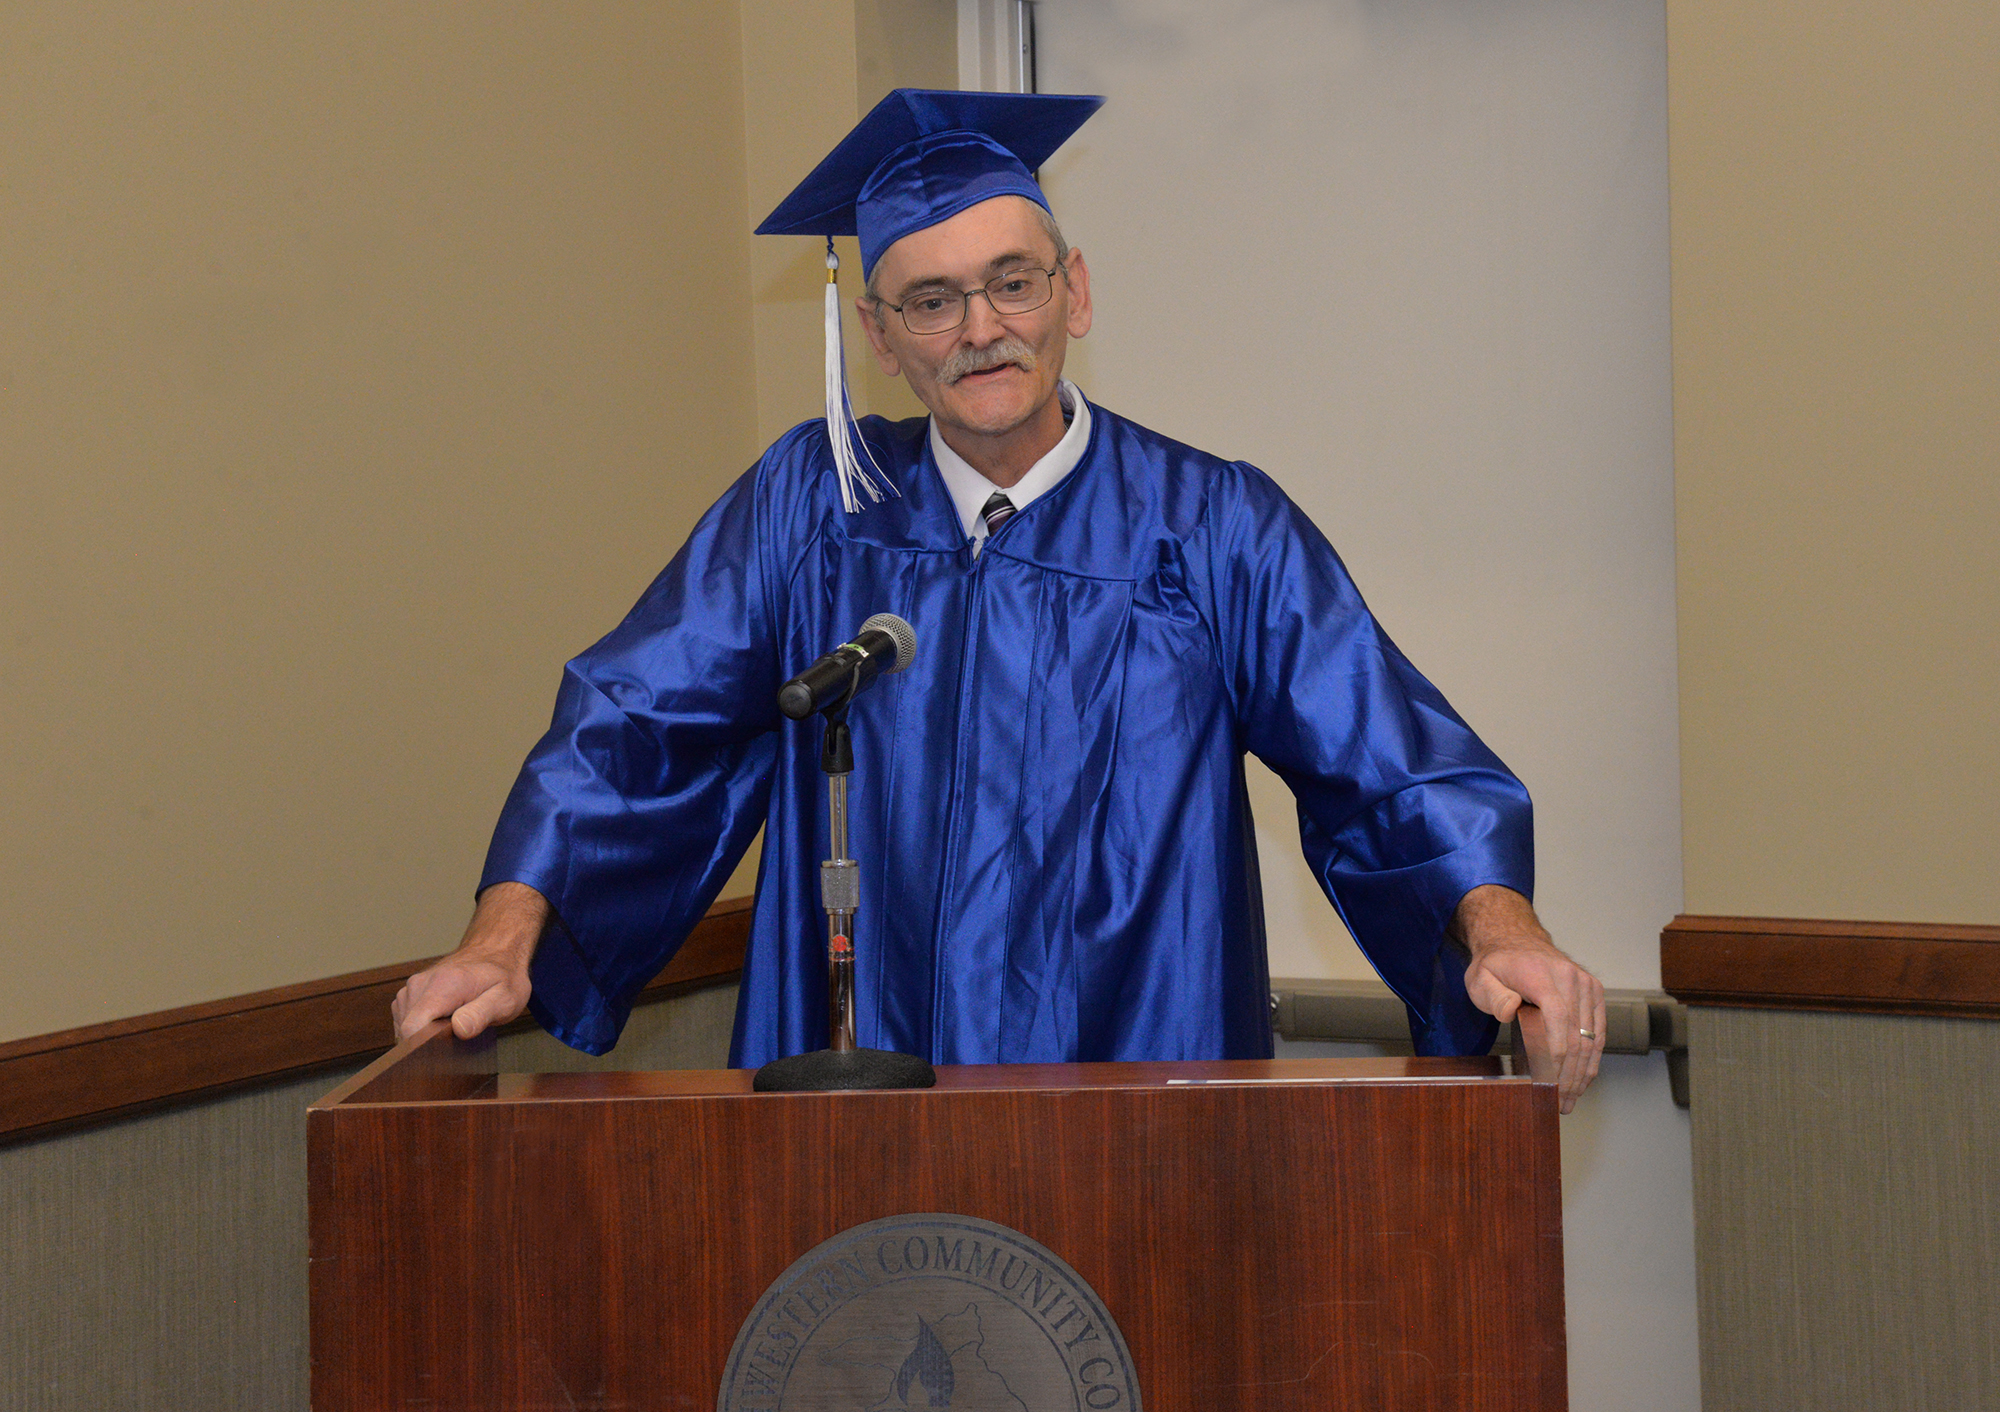 George DeWitt address the crowd during SCC’s High School Equivalency graduation ceremony on Jan. 11 in Sylva.